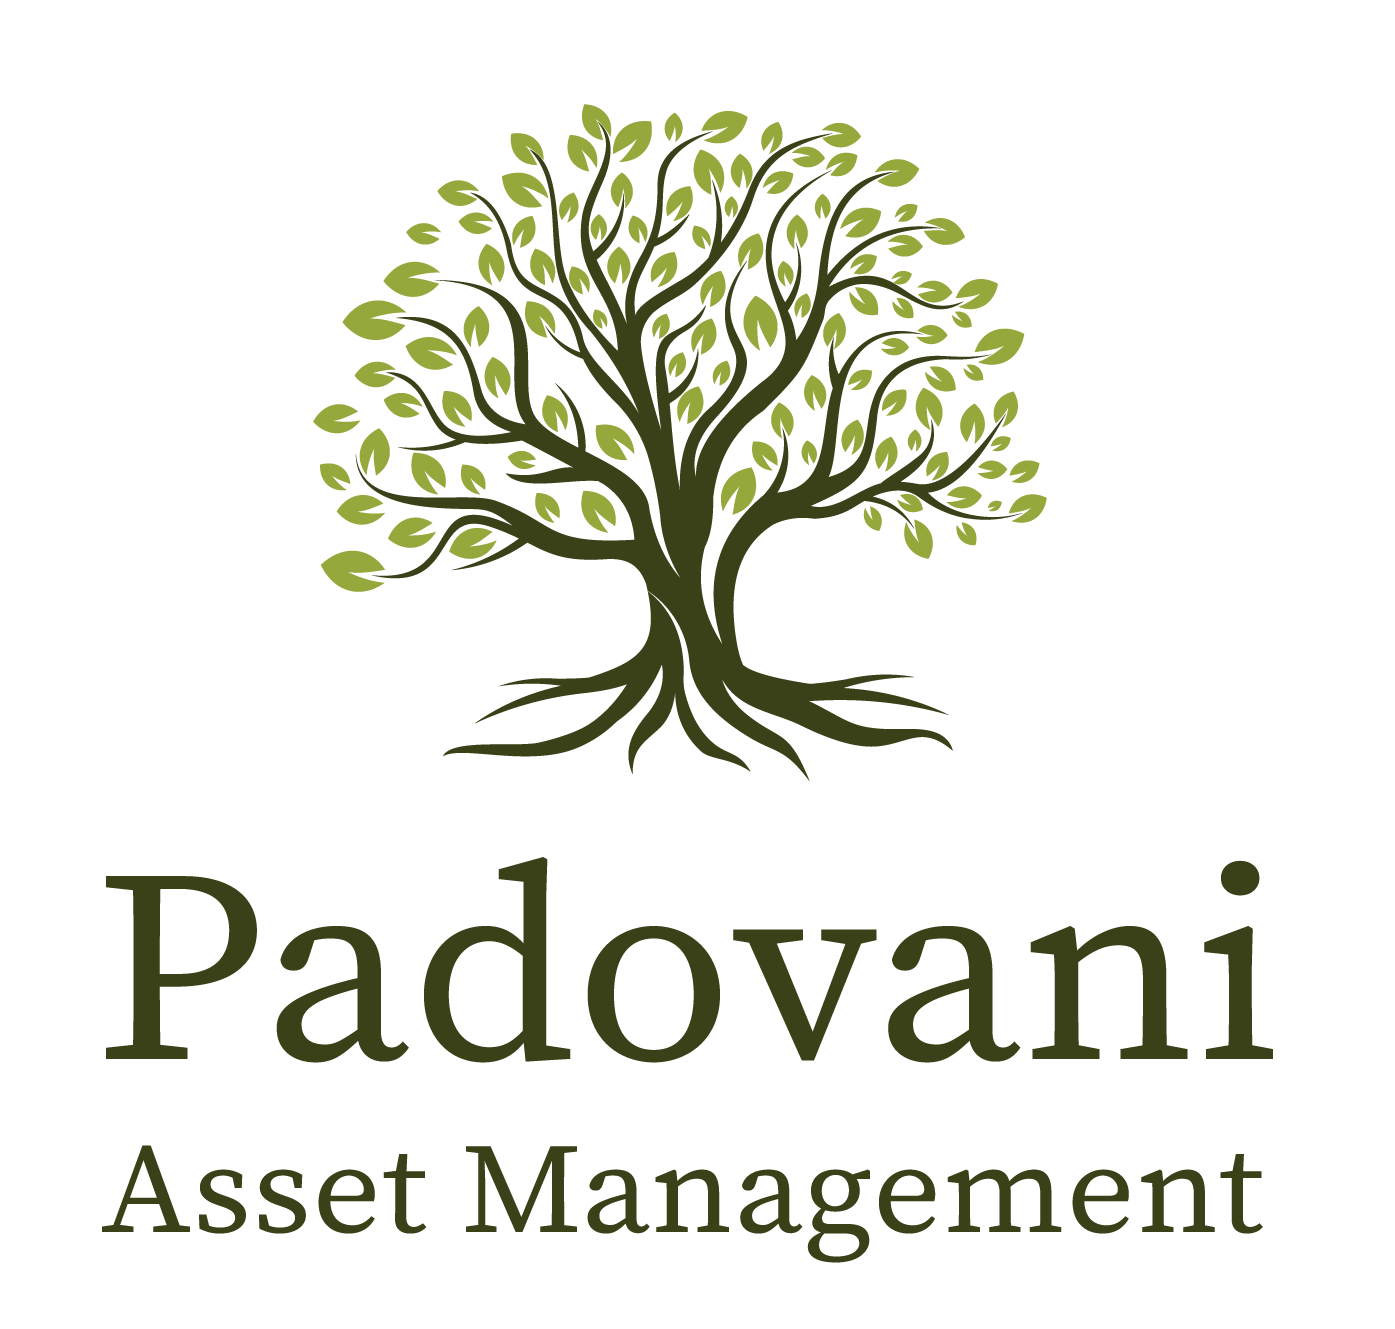 Padovani Asset Management